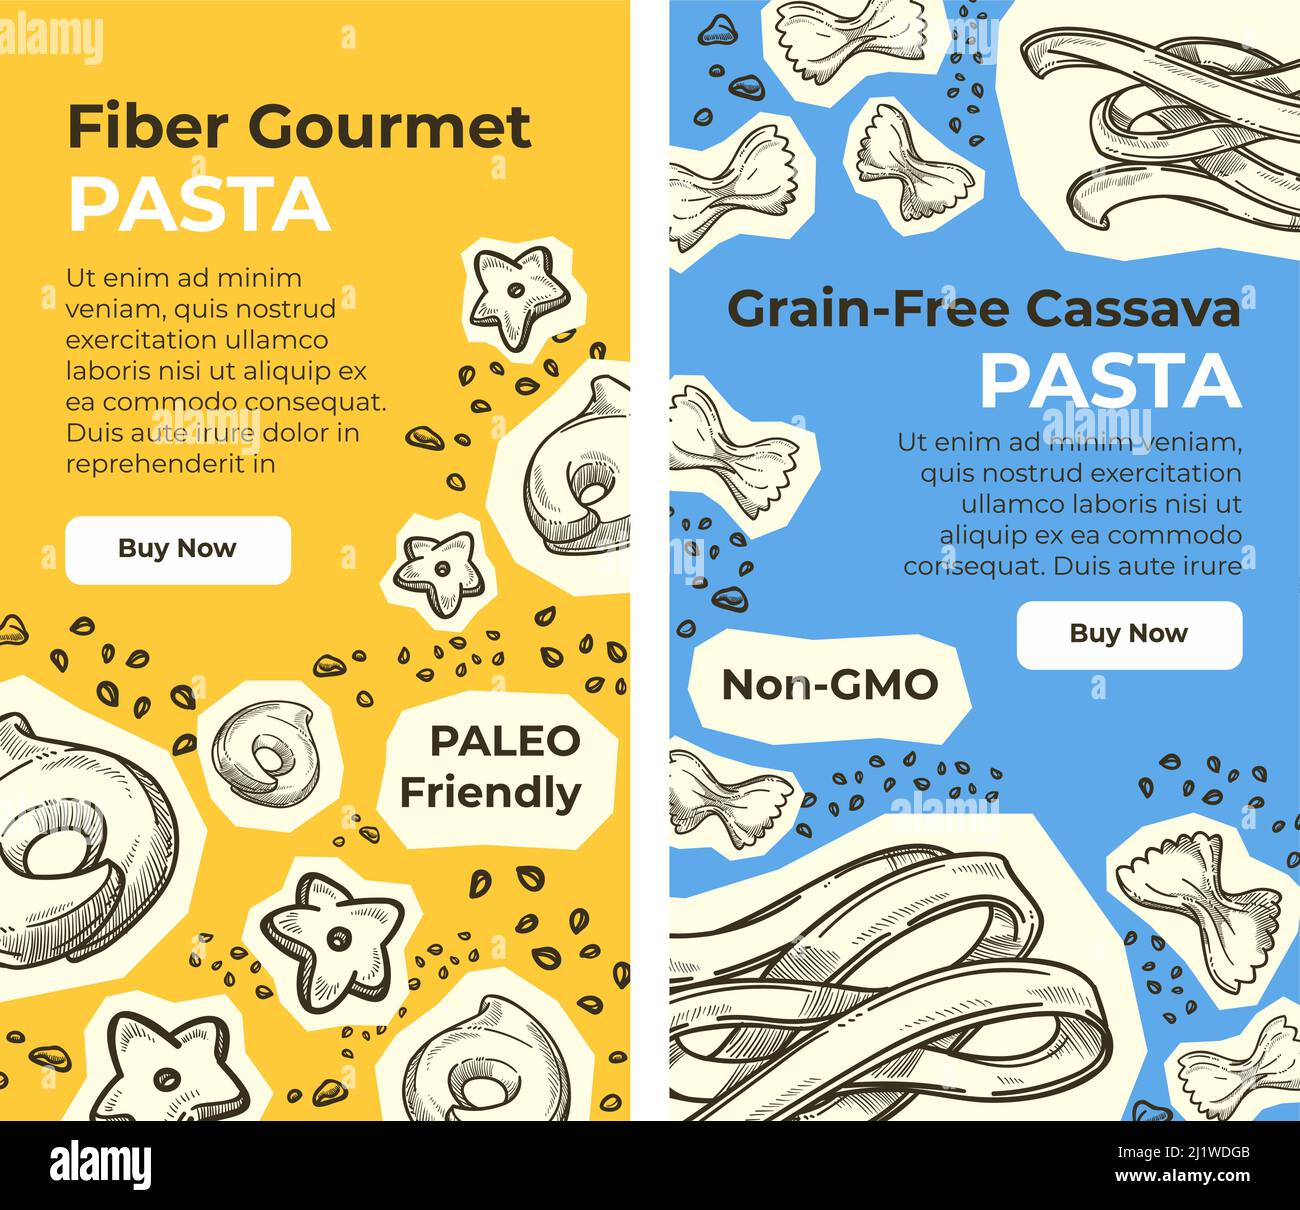 Fiber Gourmet Pasta, kornfreie Cassava Website Stock Vektor